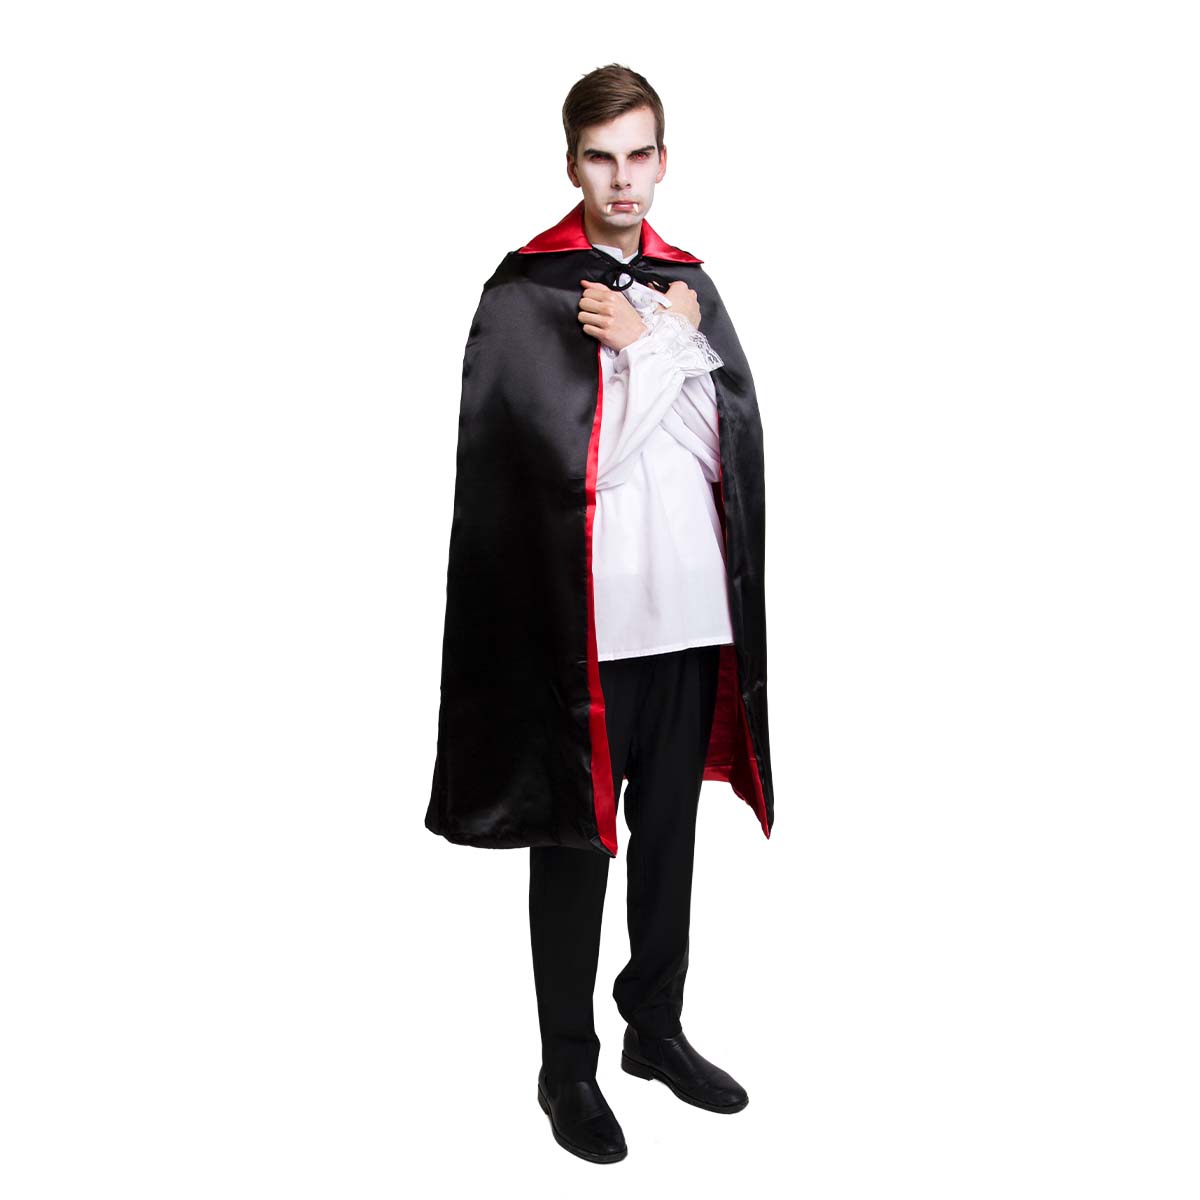 Mantel svart/röd 110 cm